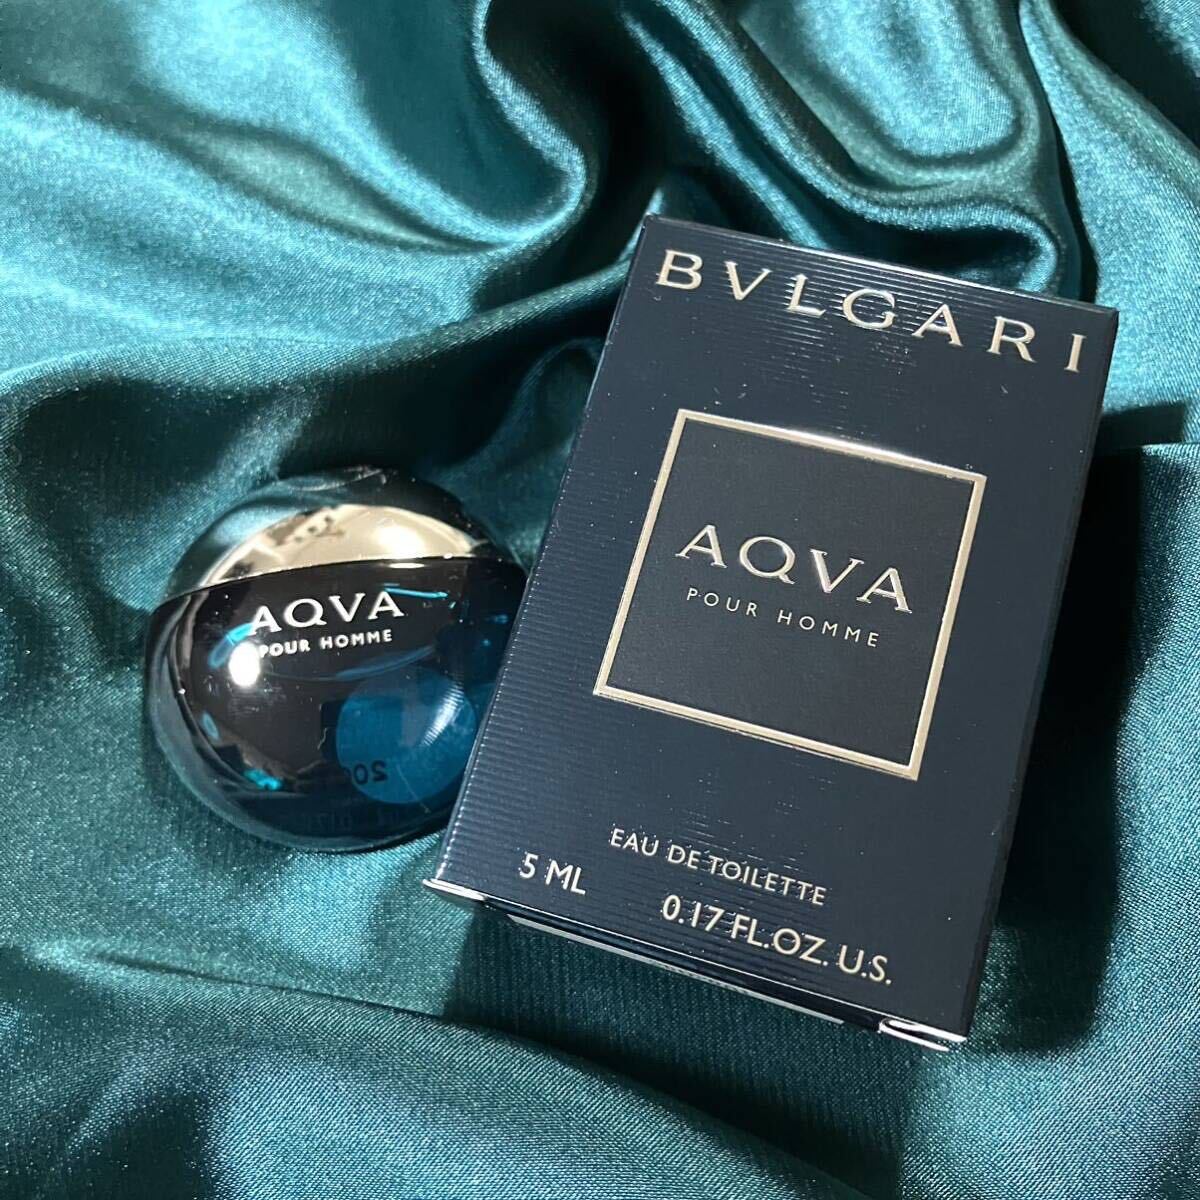  BVLGARY BVLGARI aqua AQVA pool Homme 5mlo-doto crack perfume fragrance Mini size trial almost new goods 